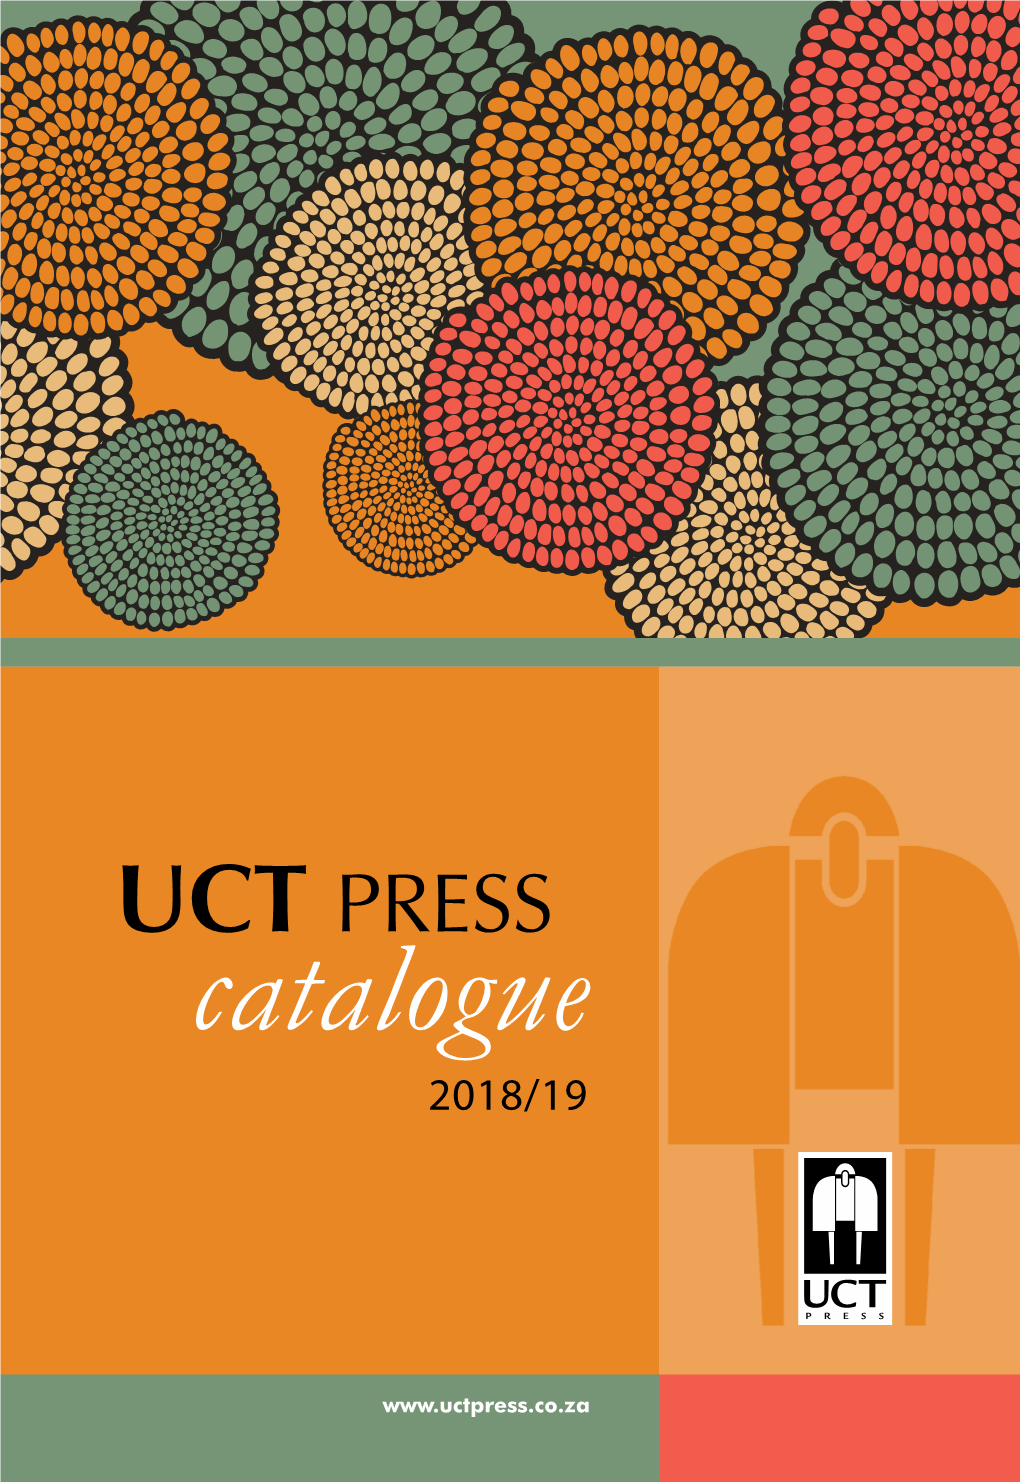 UCT PRESS Catalogue 2018/19 2018/19 Contents